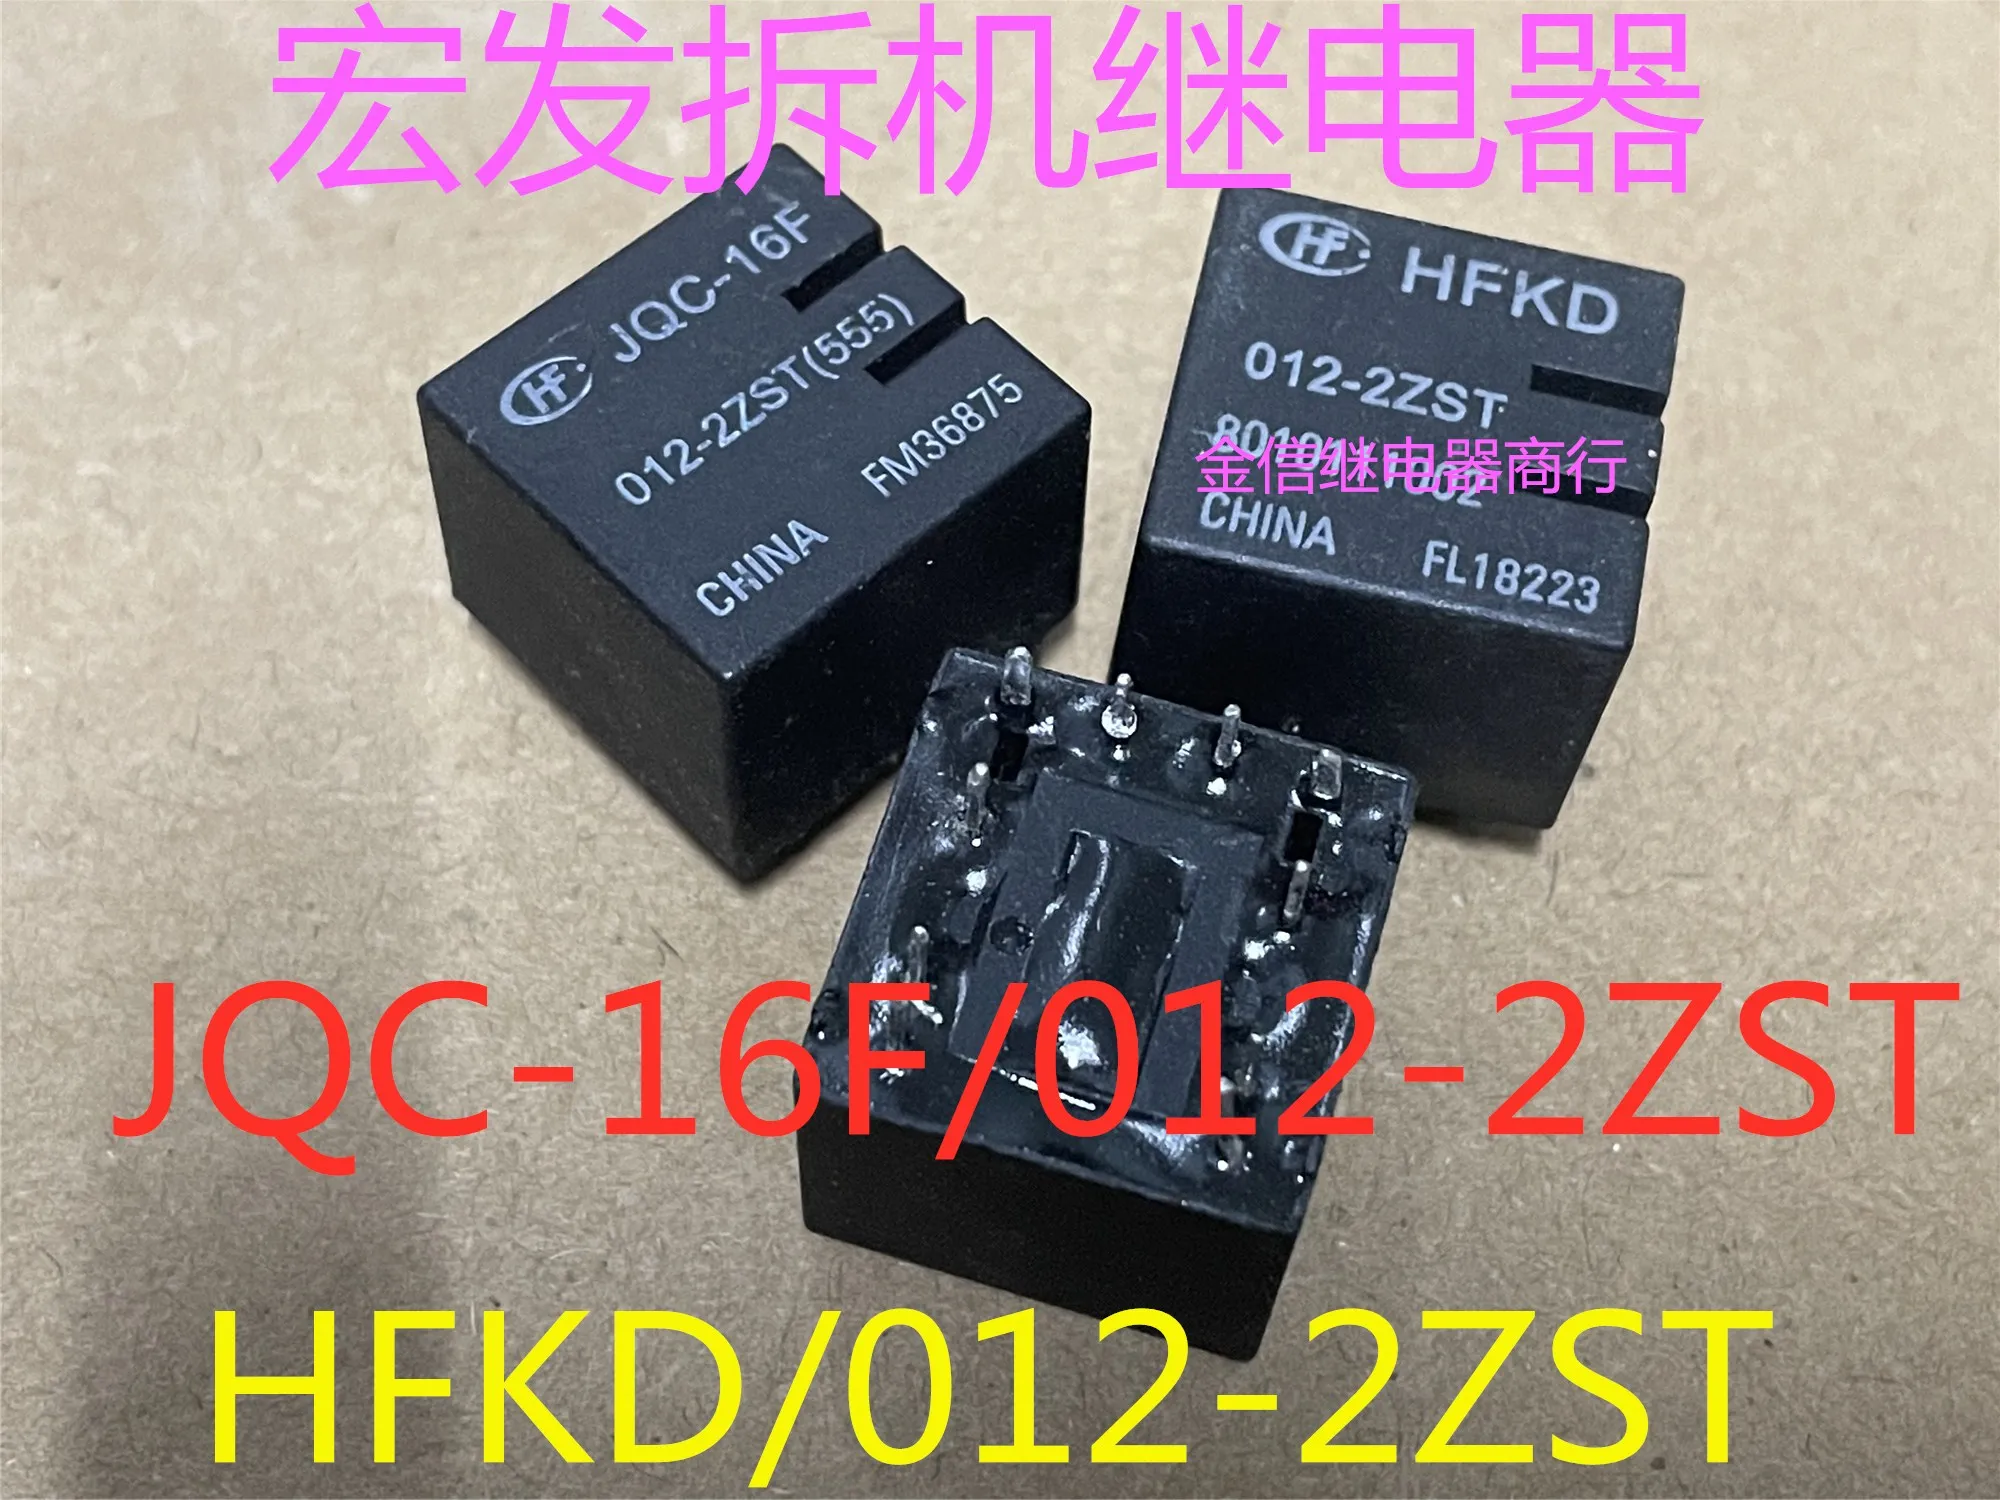 

Free shipping JQC-16F/012-2ZST HFKD 012-2ZST 10PCS As shown